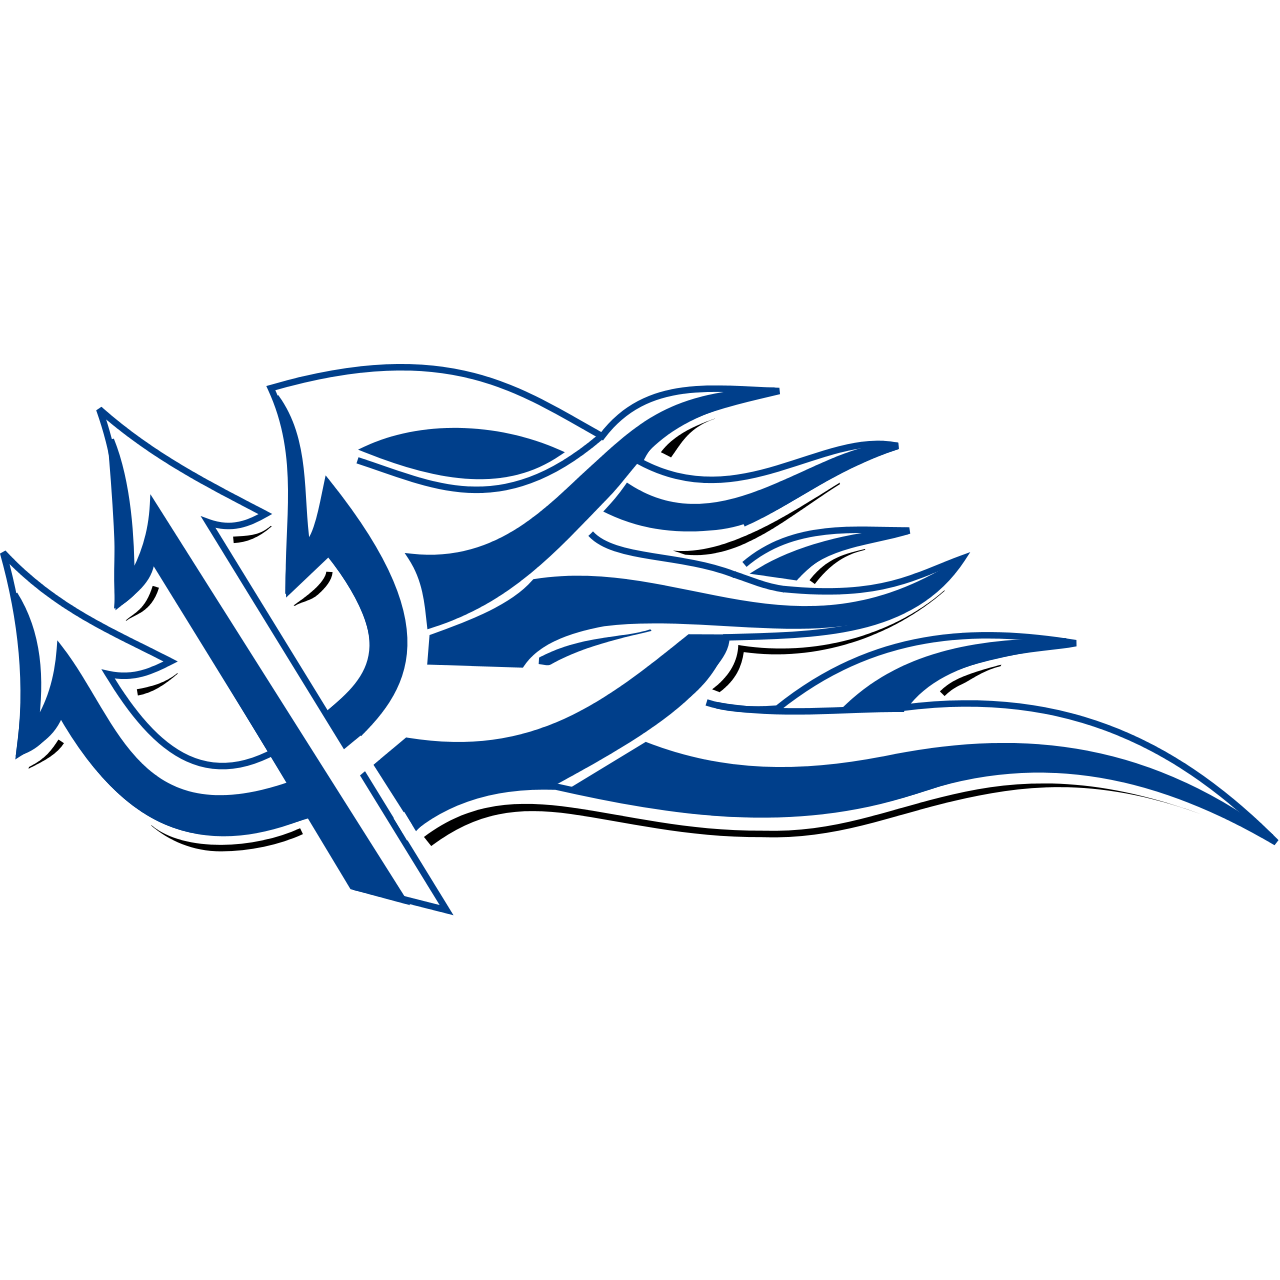 Cineplexx_Blue_Devils_Logo.png